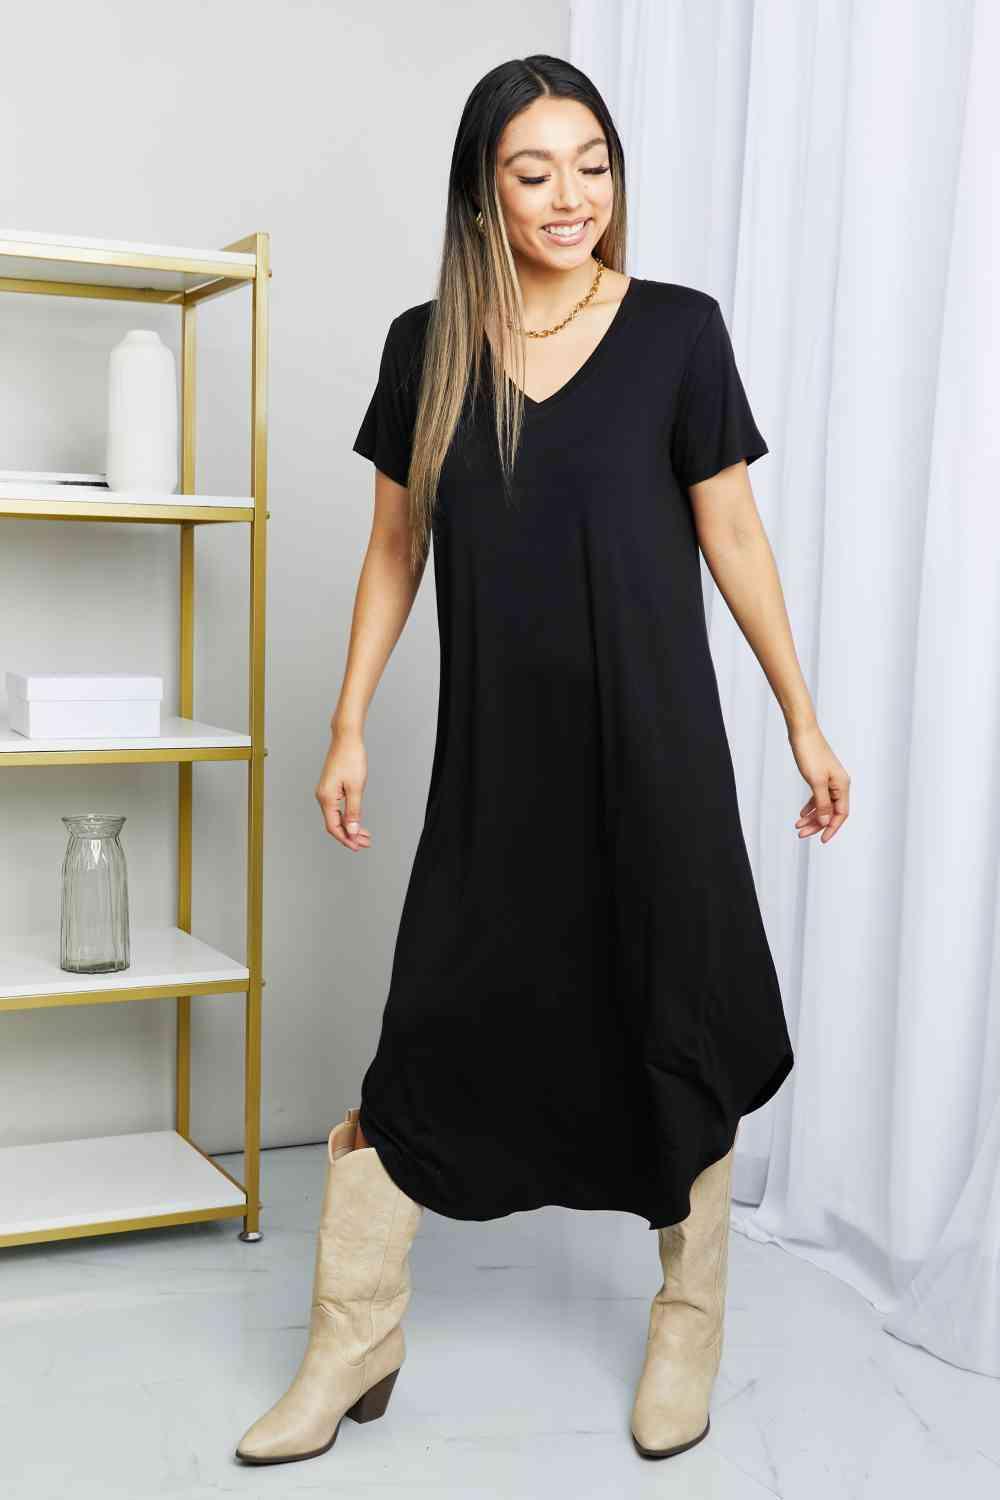 HYFVE V-Neck Short Sleeve Curved Hem Dress in Black - AMIClubwear